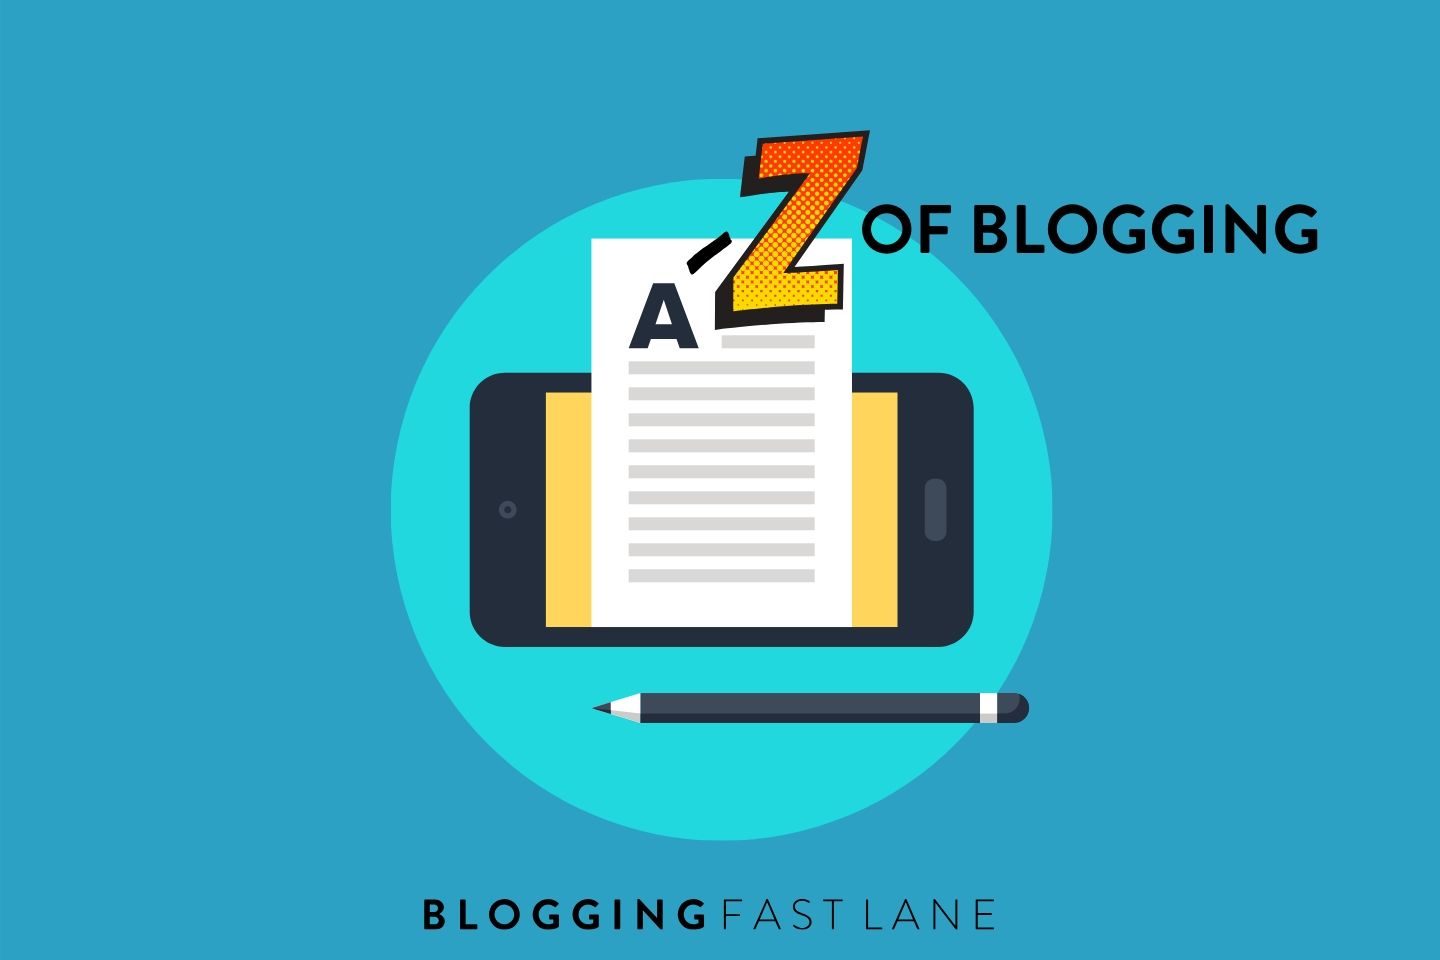 blogging terms